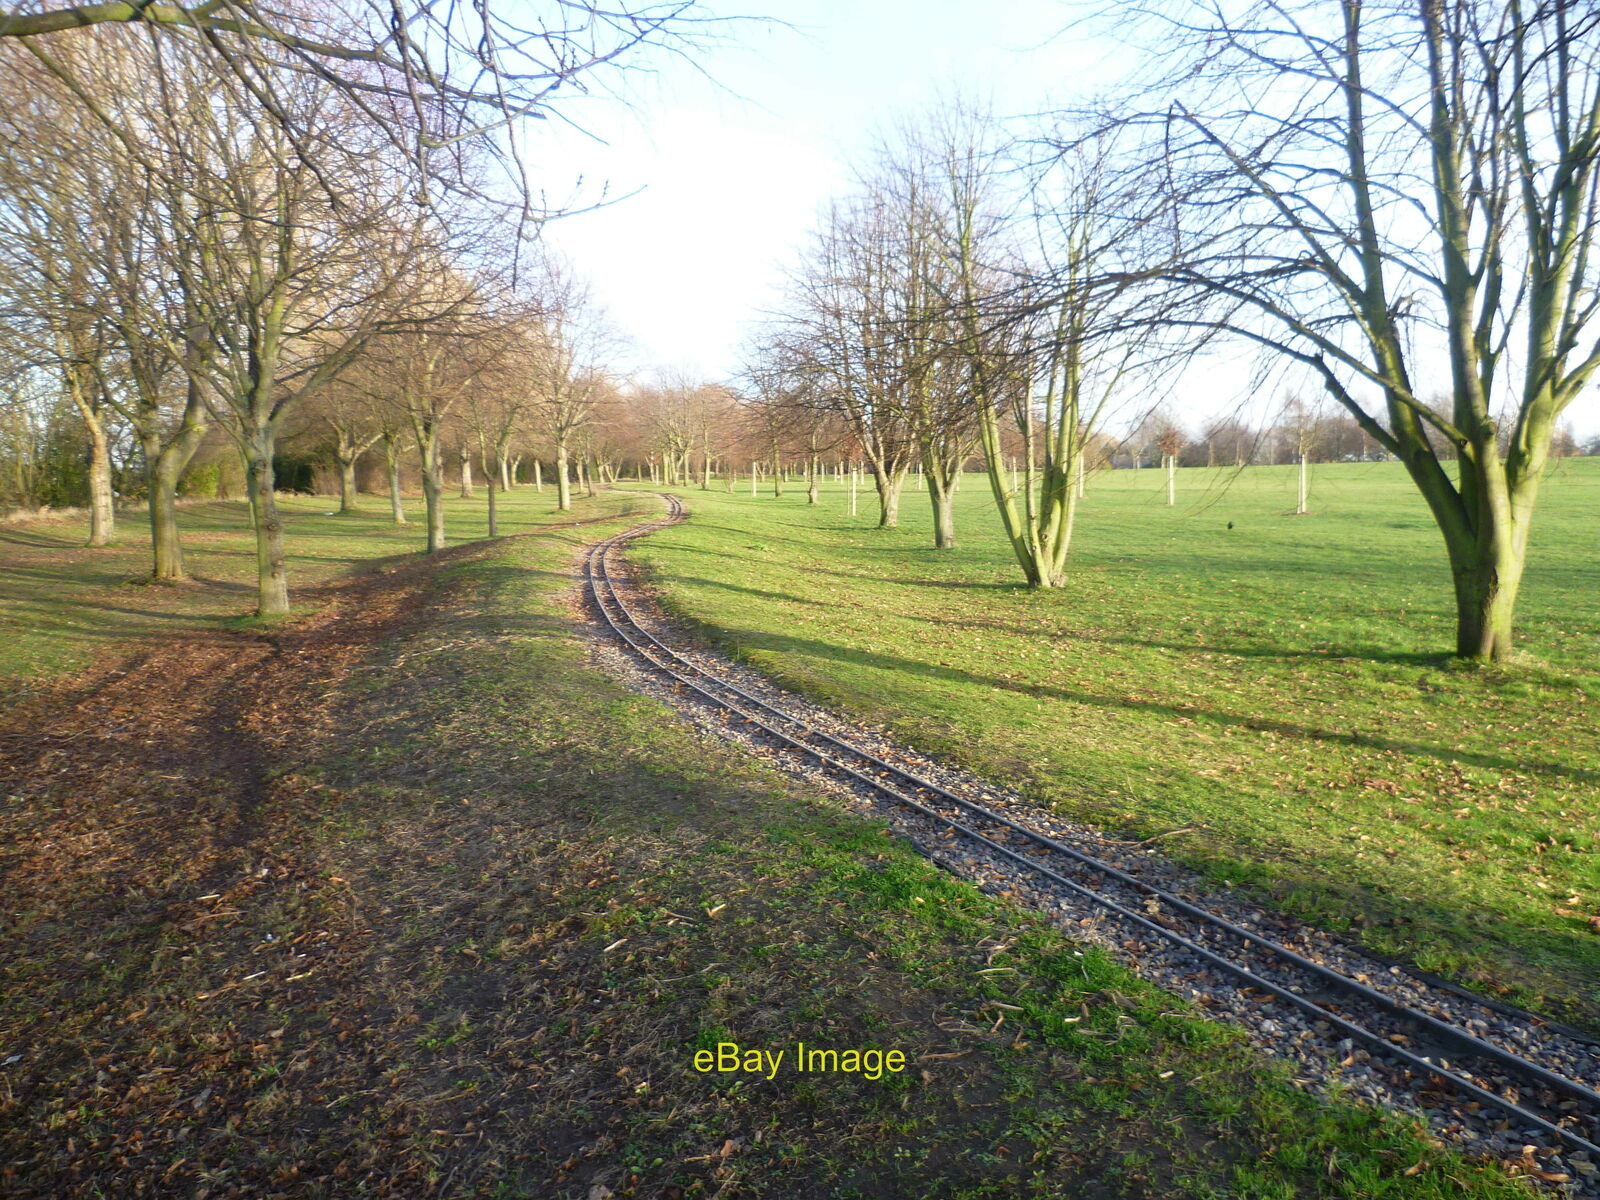 Photo 6x4 Model railway track in Swanley Park  c2012